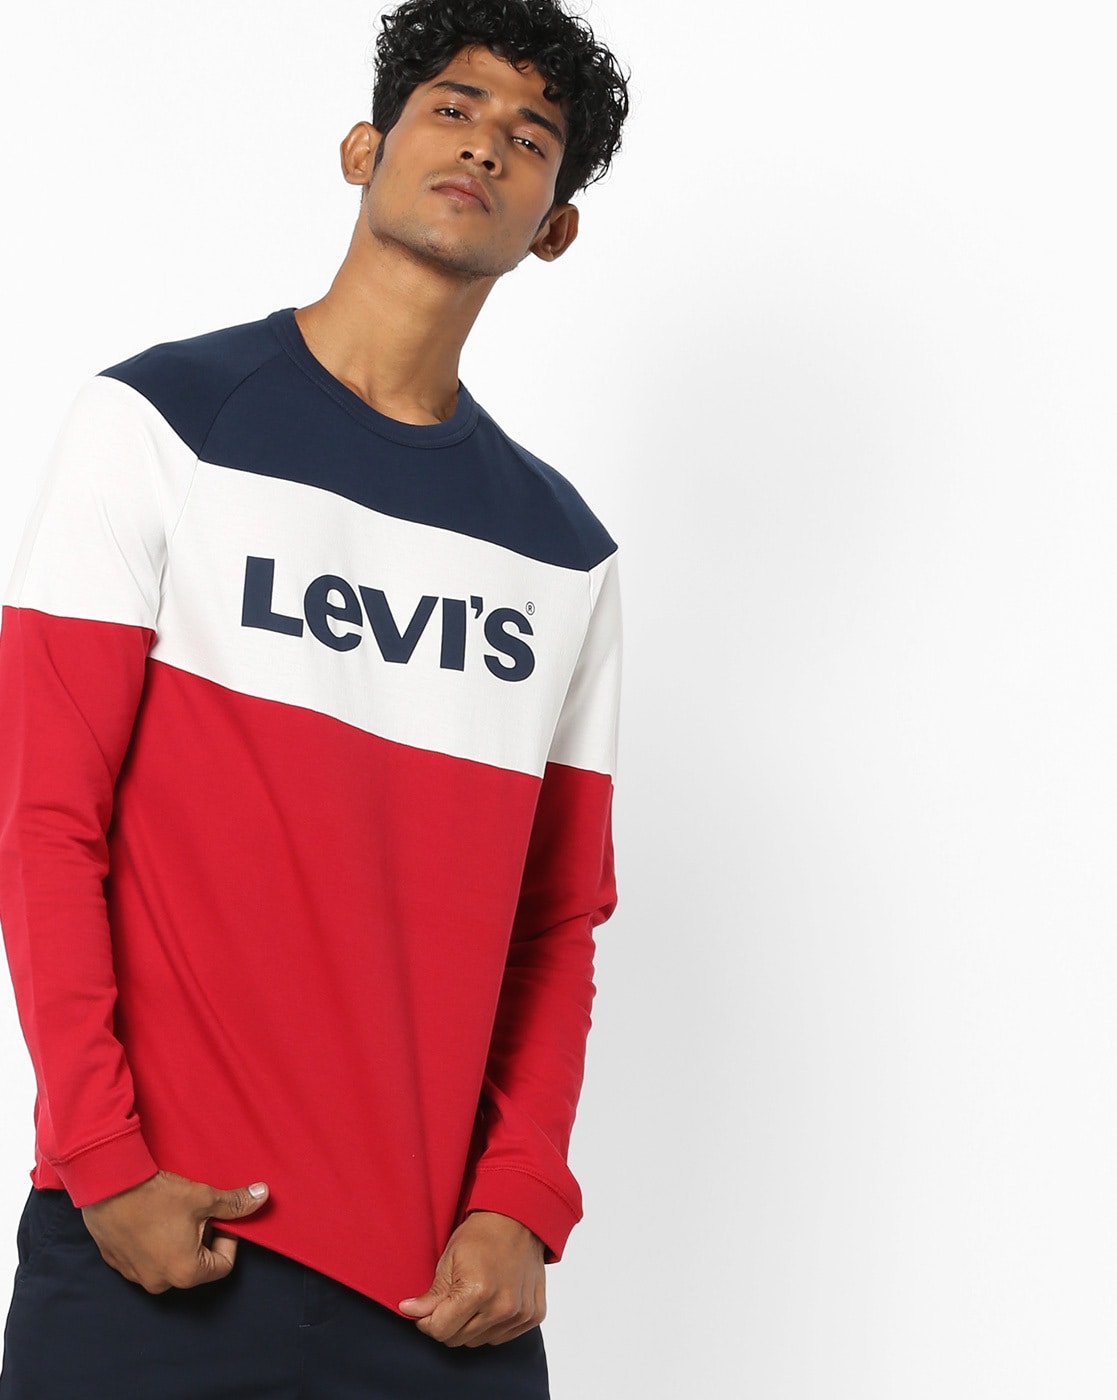 levis tshirt for men